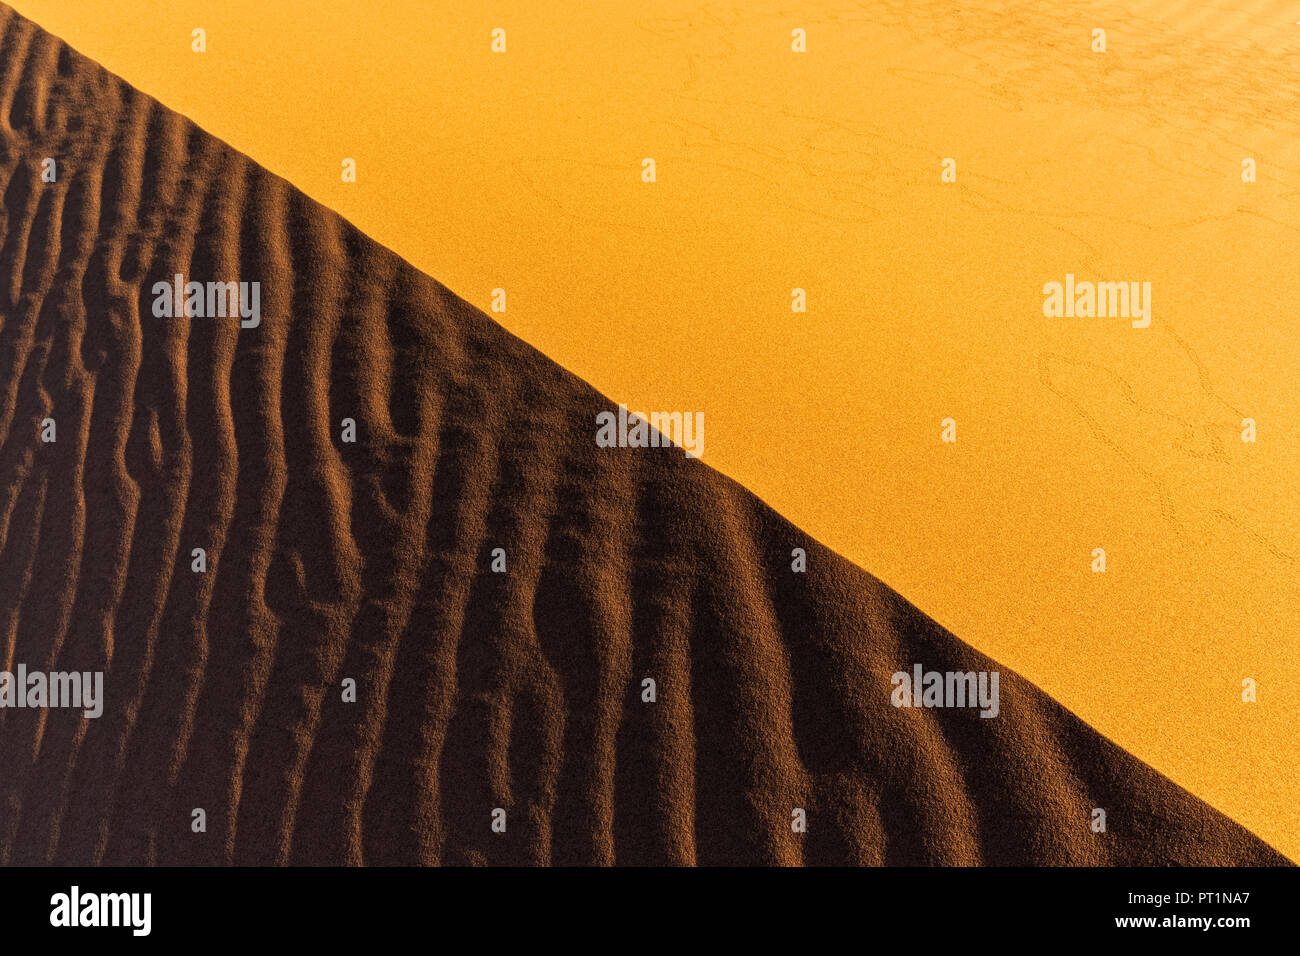 La Namibia, il deserto del Namib Naukluft, Parco Nazionale, dune di sabbia, full frame Foto Stock